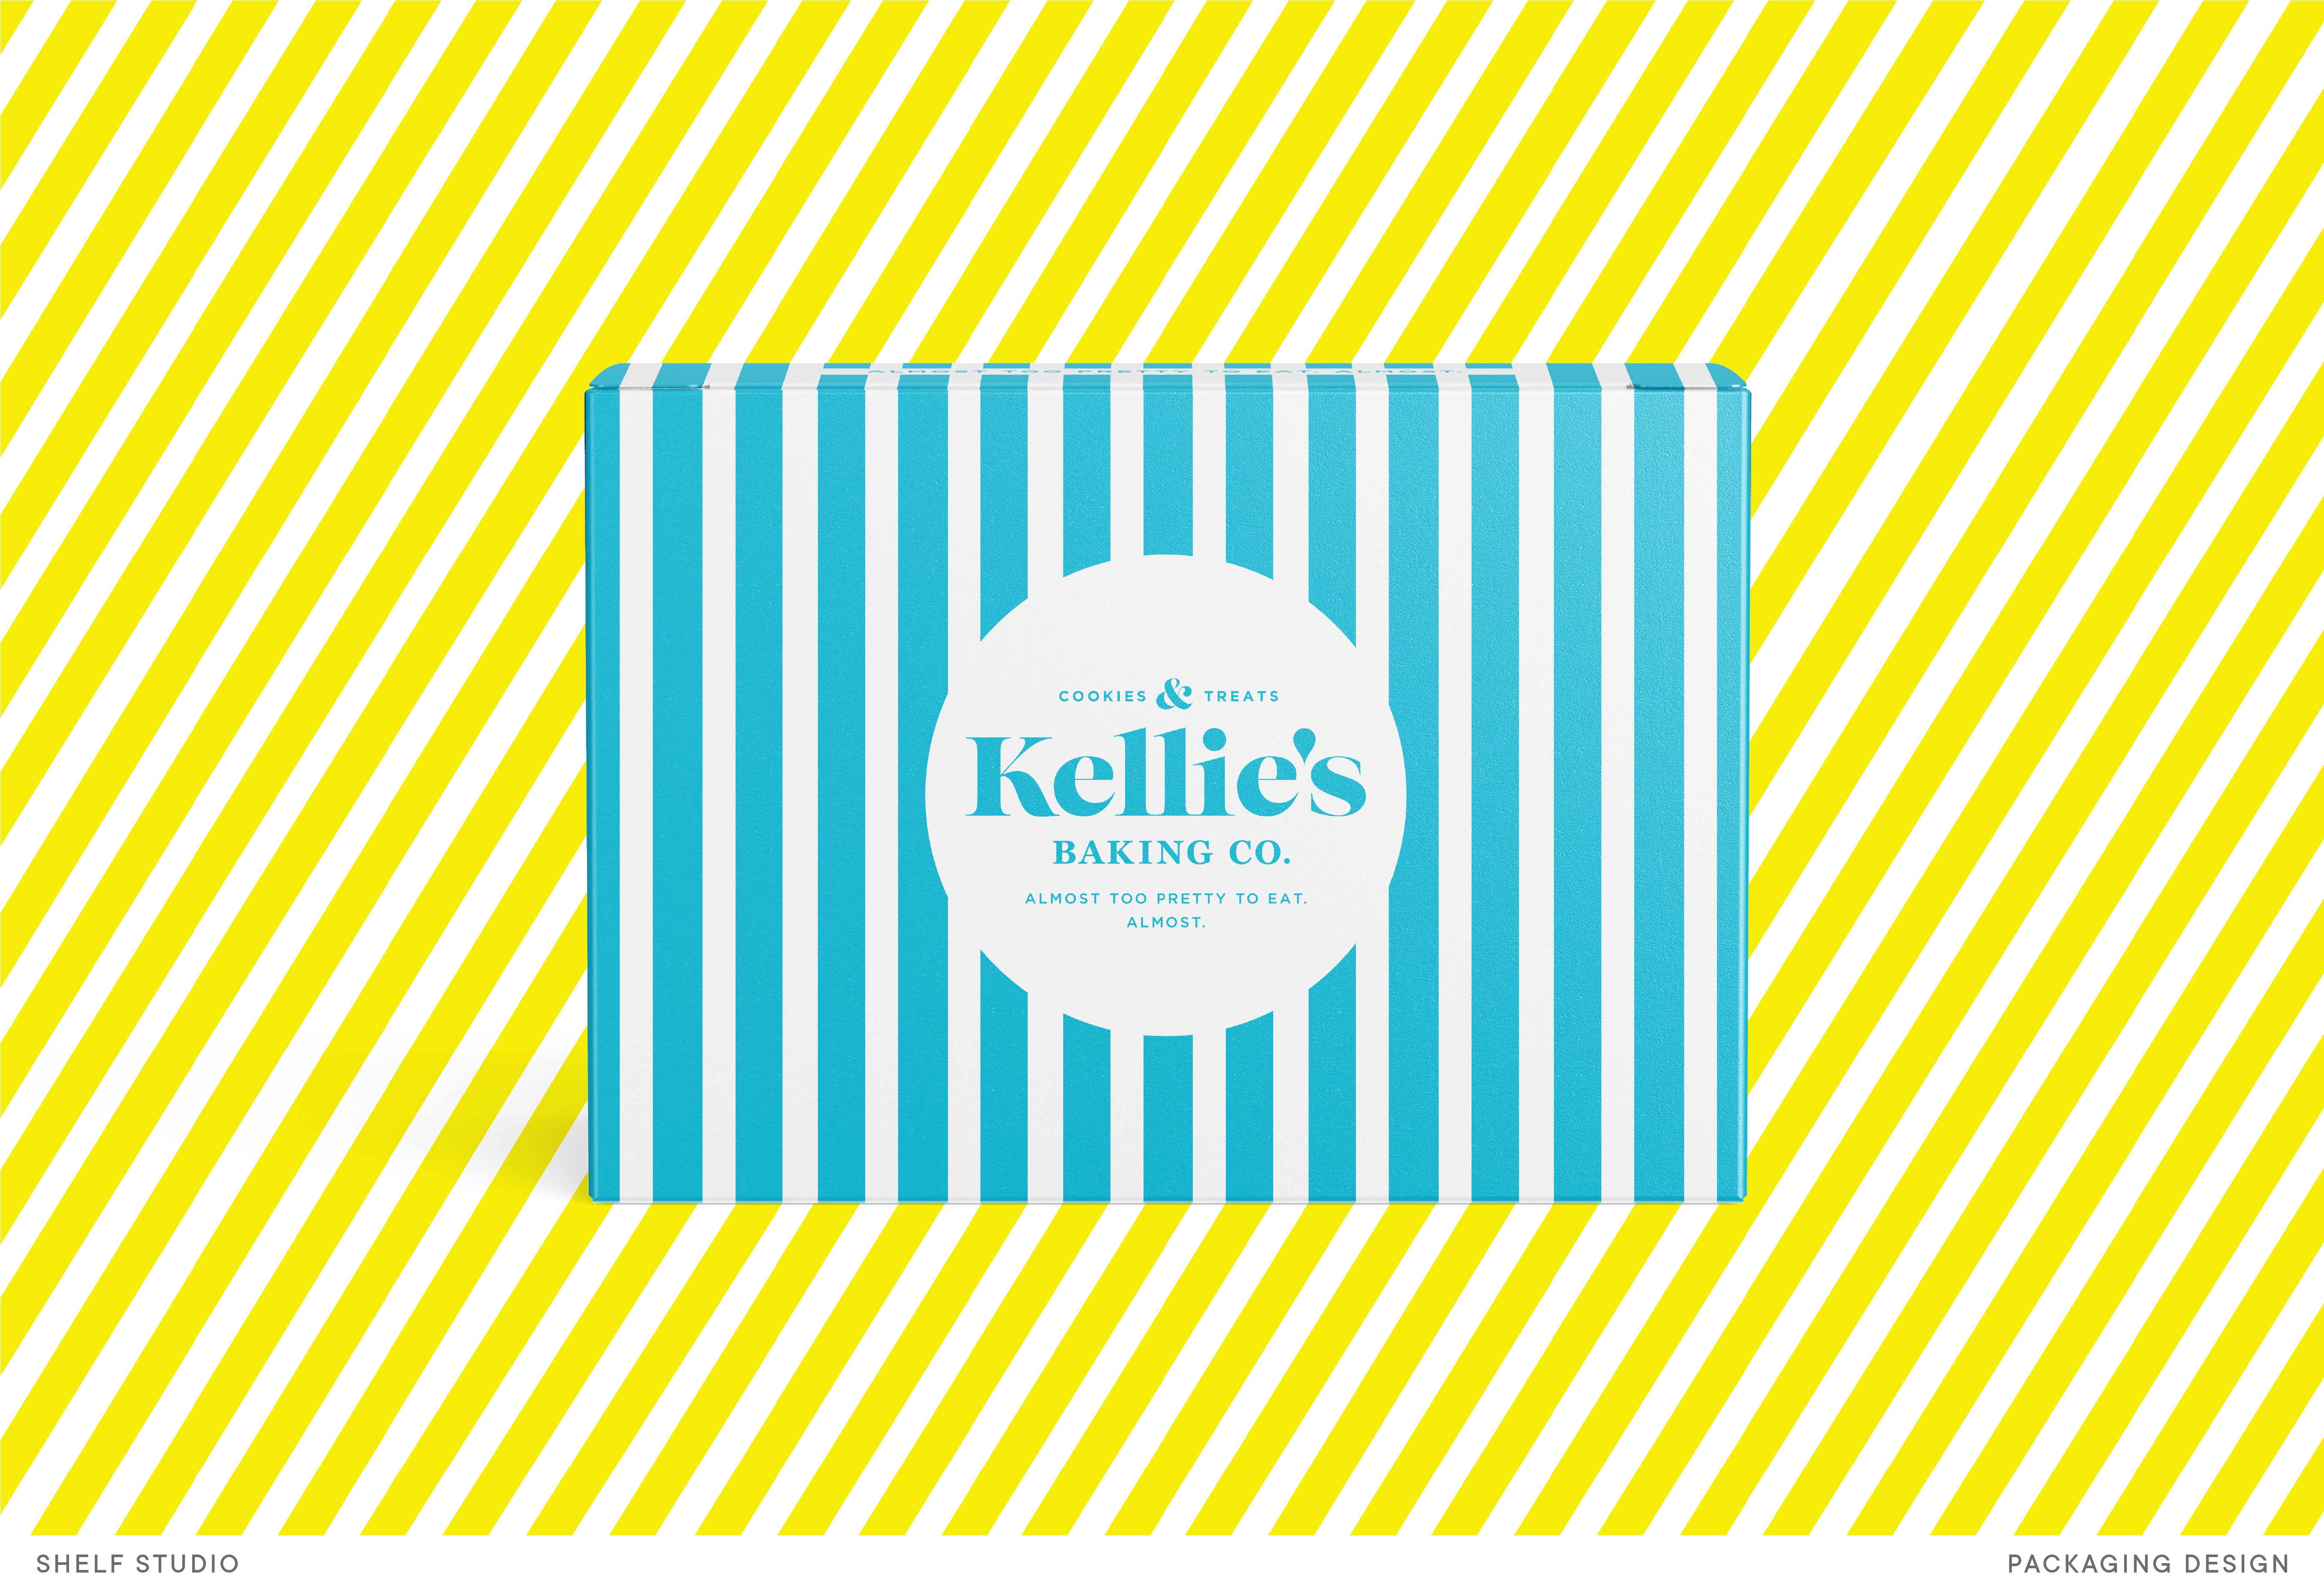 SHELFWEB_Kellies_NEWImages_PackagingDesign_2